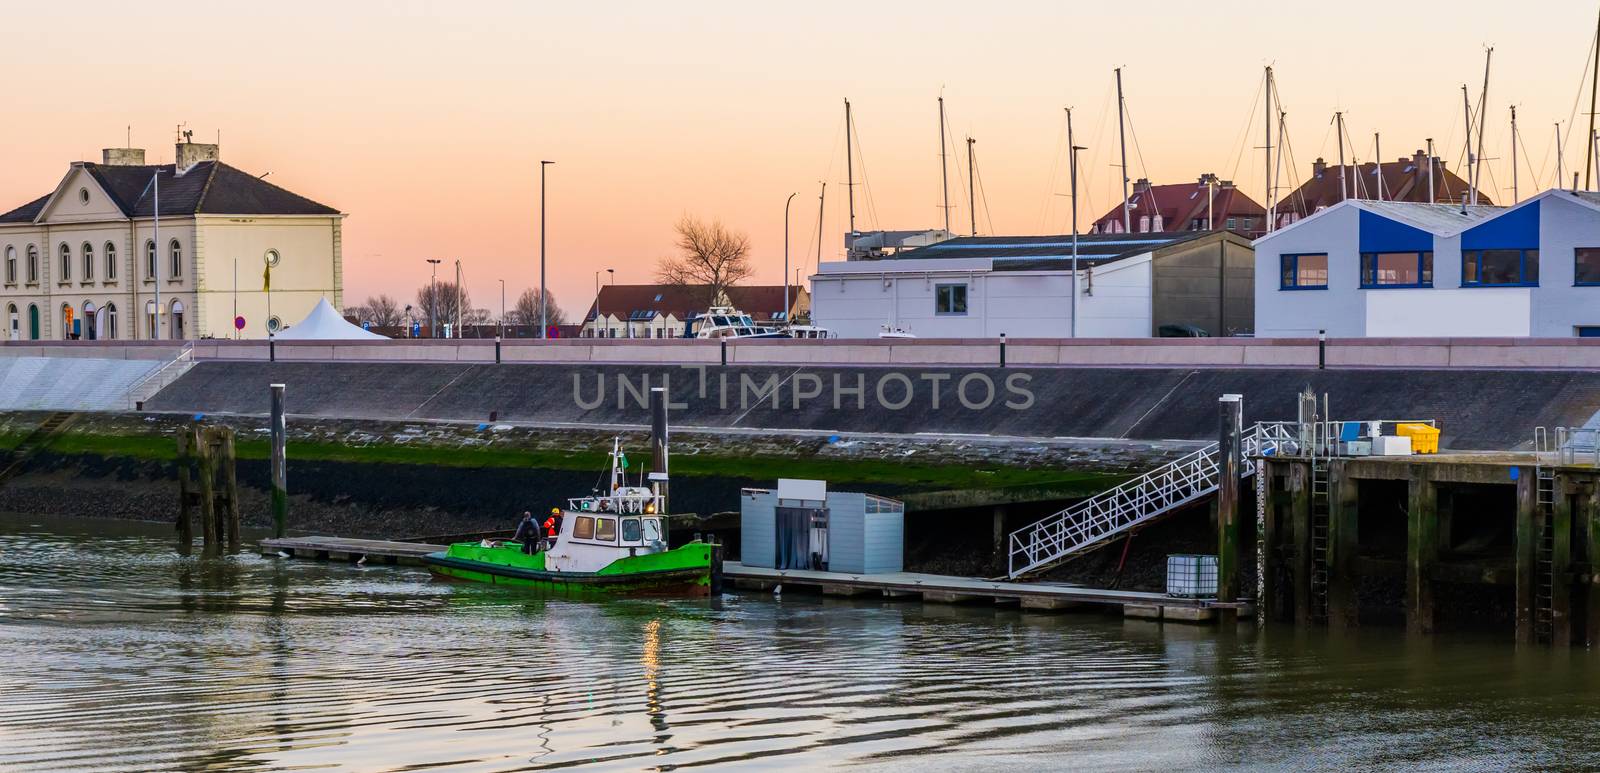 Docked boat with workers in the harbor of Blankenberge, Belgium, popular european city